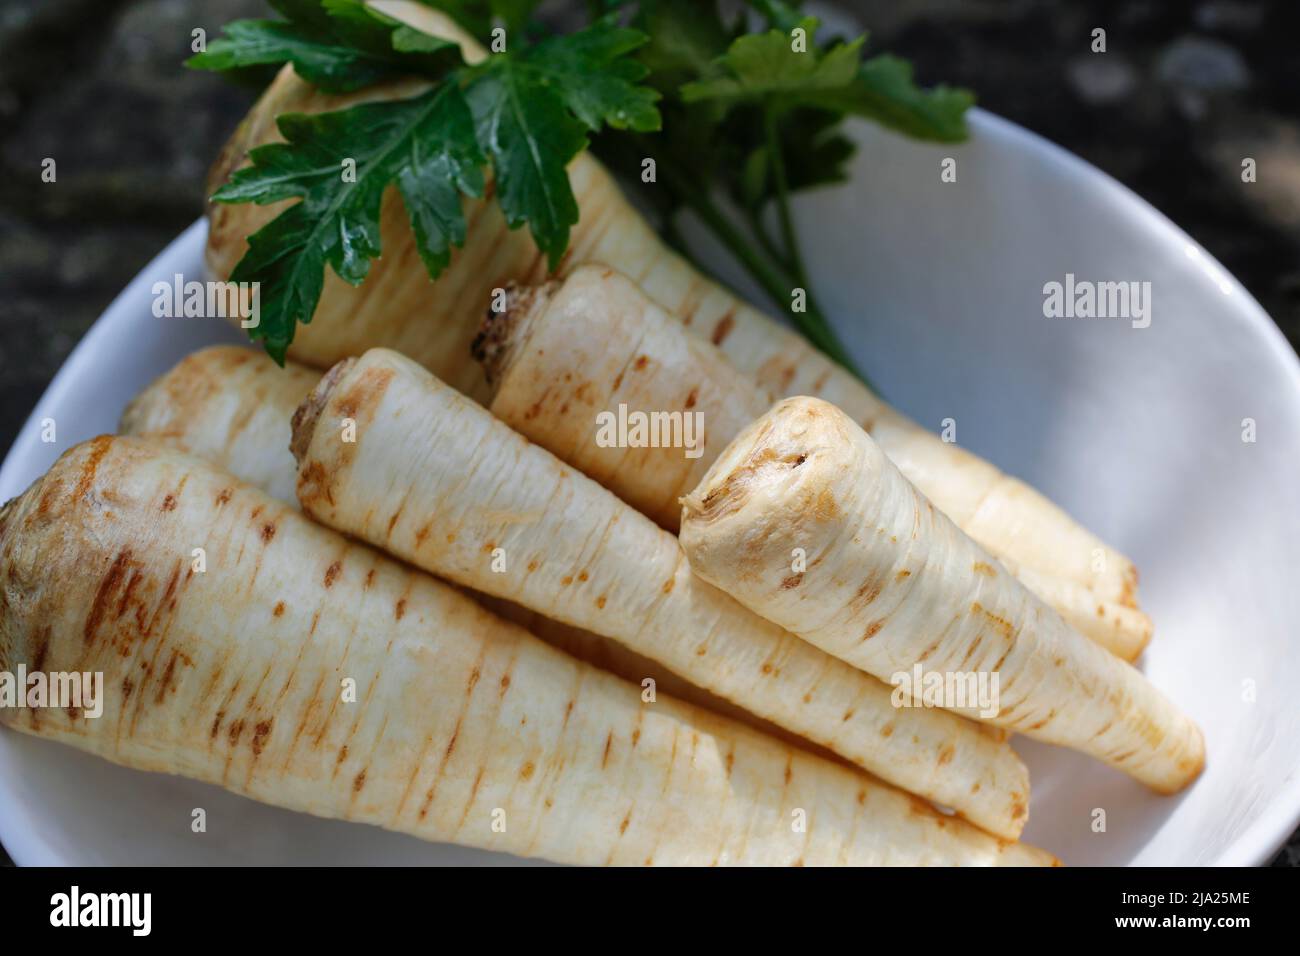 Swabian cuisine, preparation parsley root (Petroselinum crispum subsp. tuberosum) in peel, winter vegetables, traditional cuisine, vegetables Stock Photo